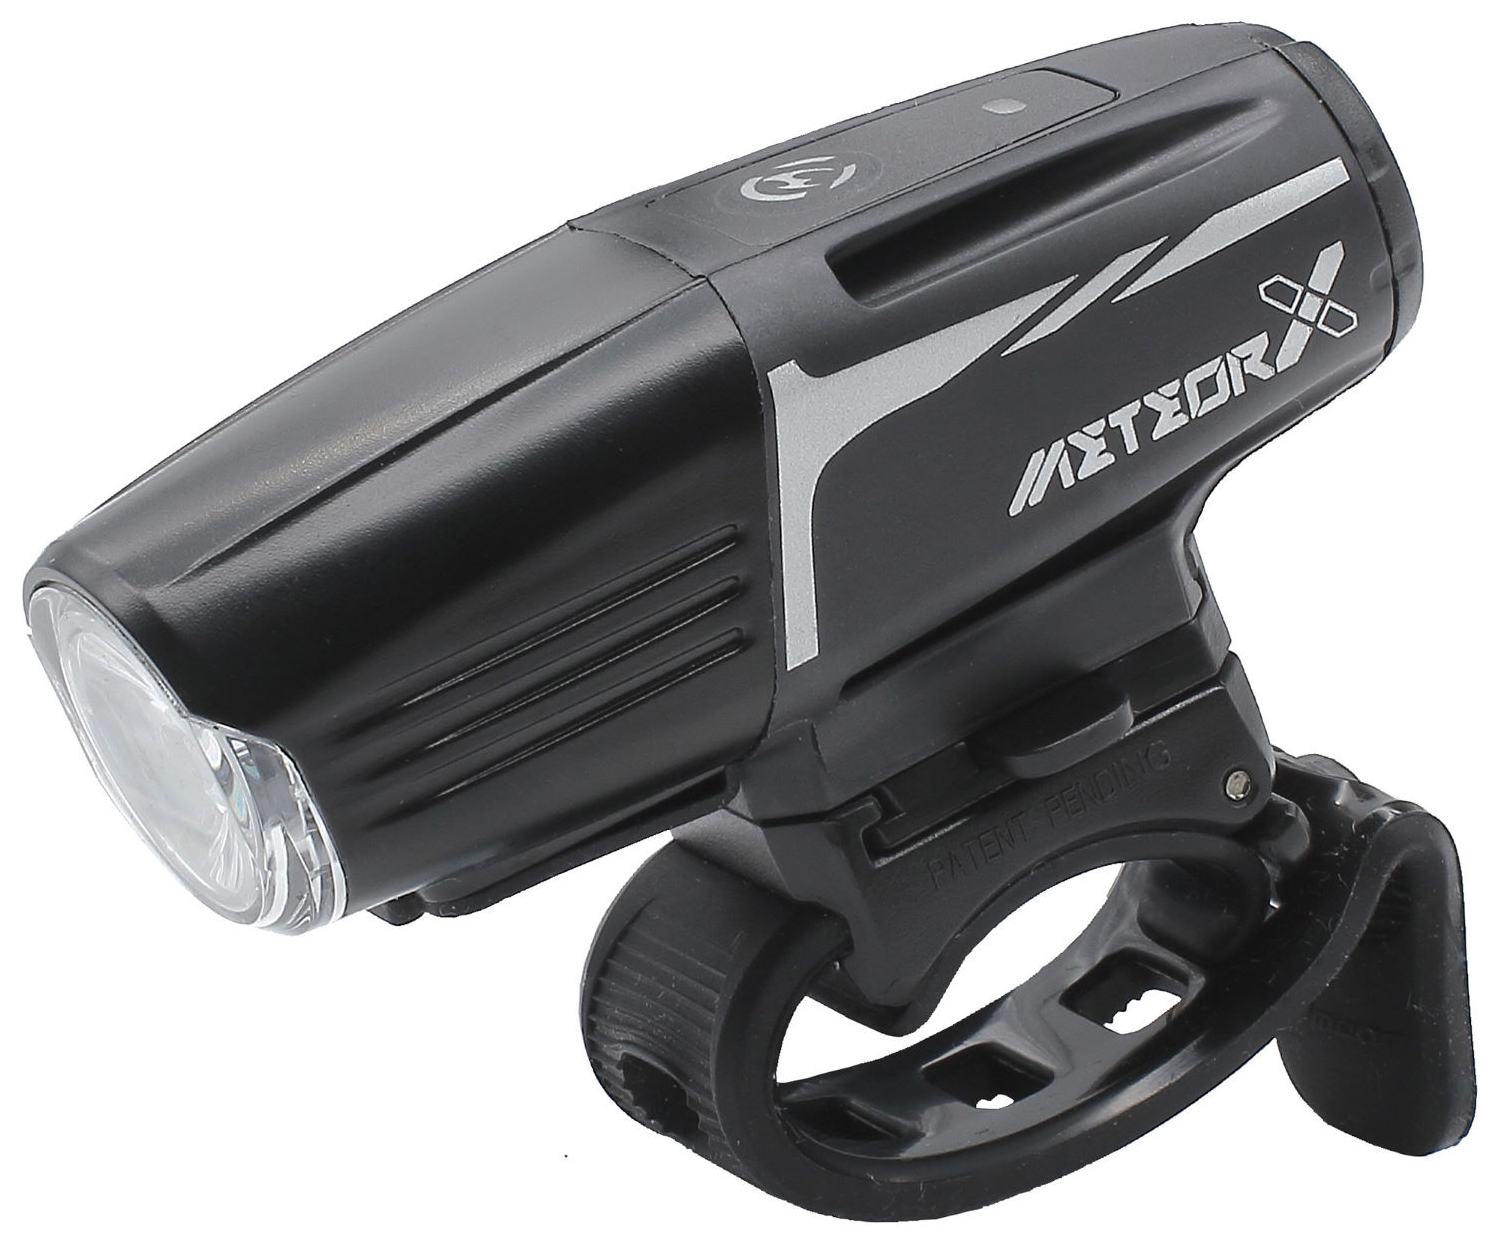  Передний фонарь для велосипеда Moon Meteor X Auto Pro